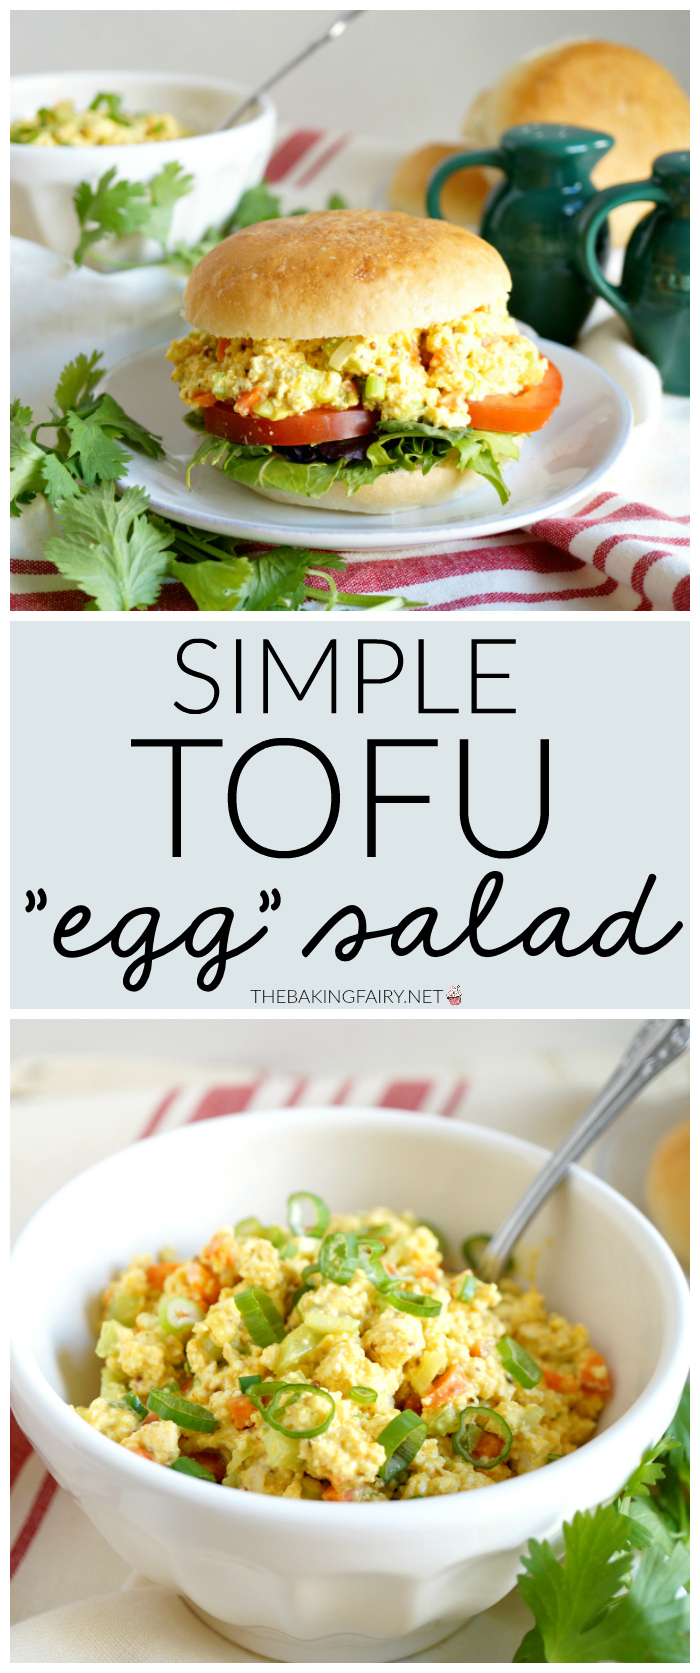 egg salad collage for Pinterest